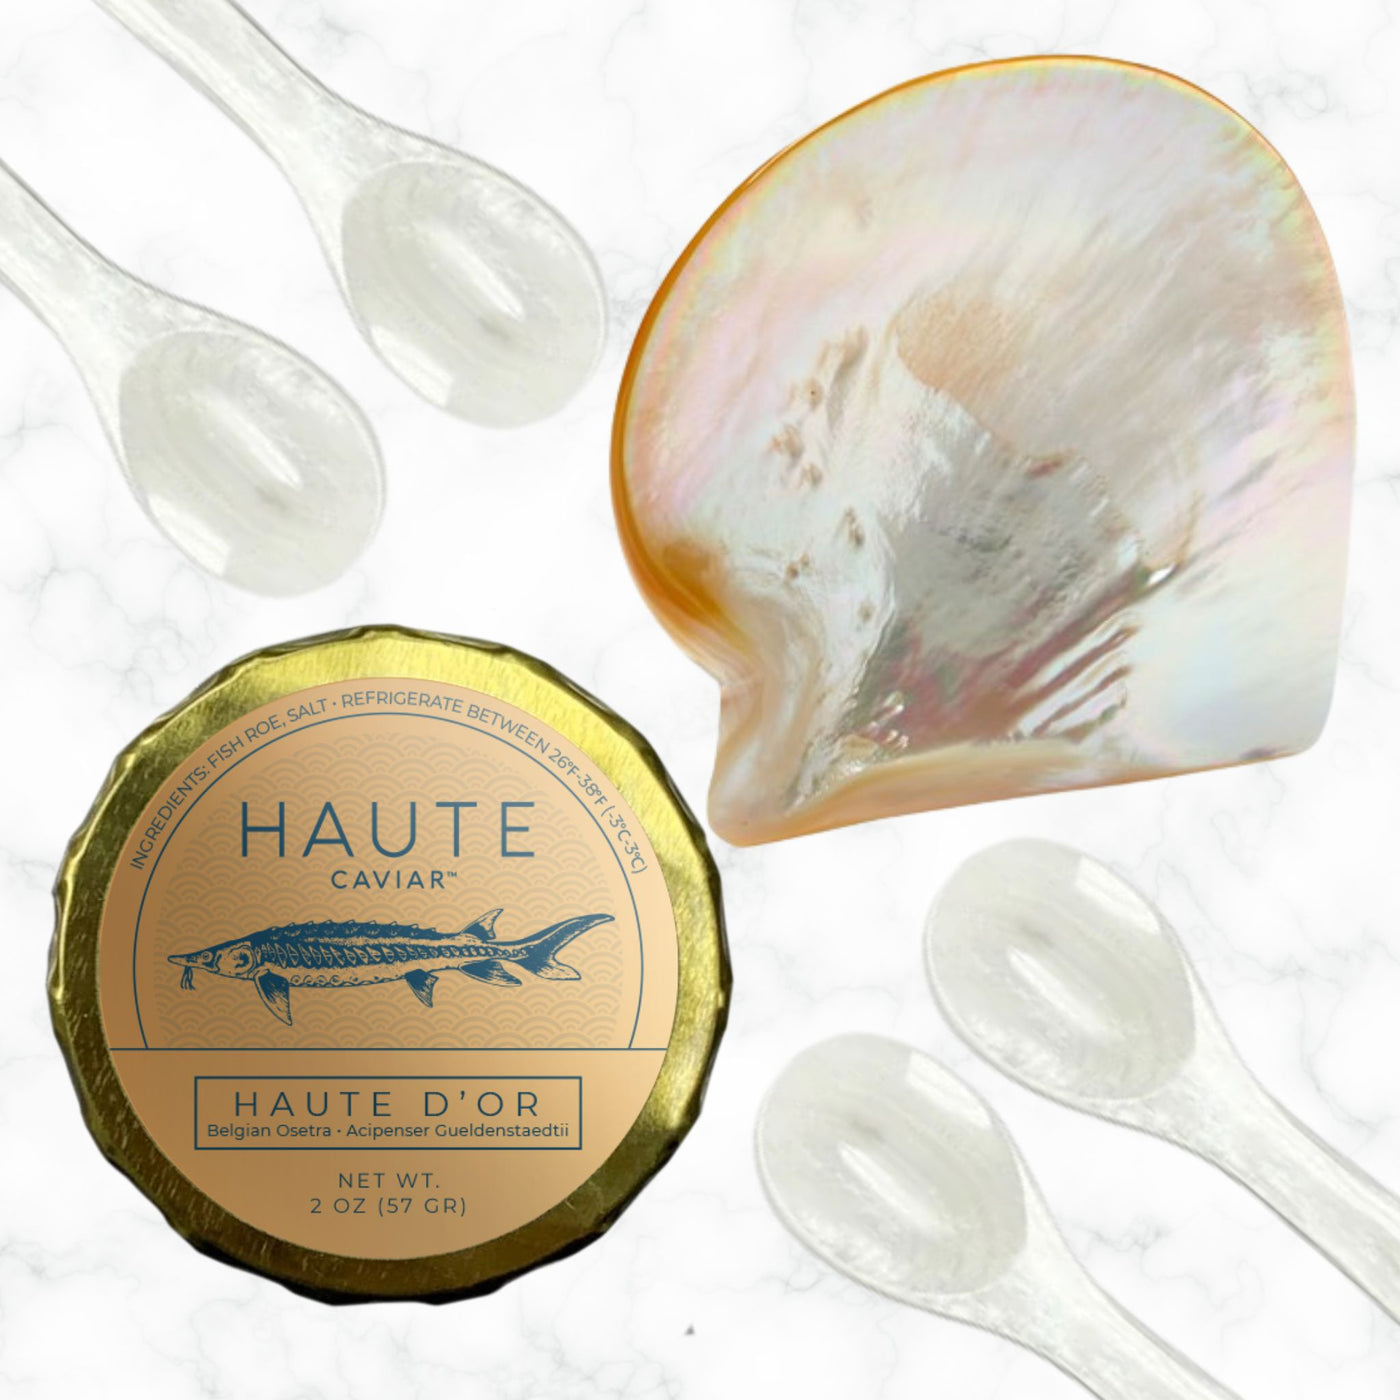 Haute Caviar Hostess Gift - Haute Caviar Company 